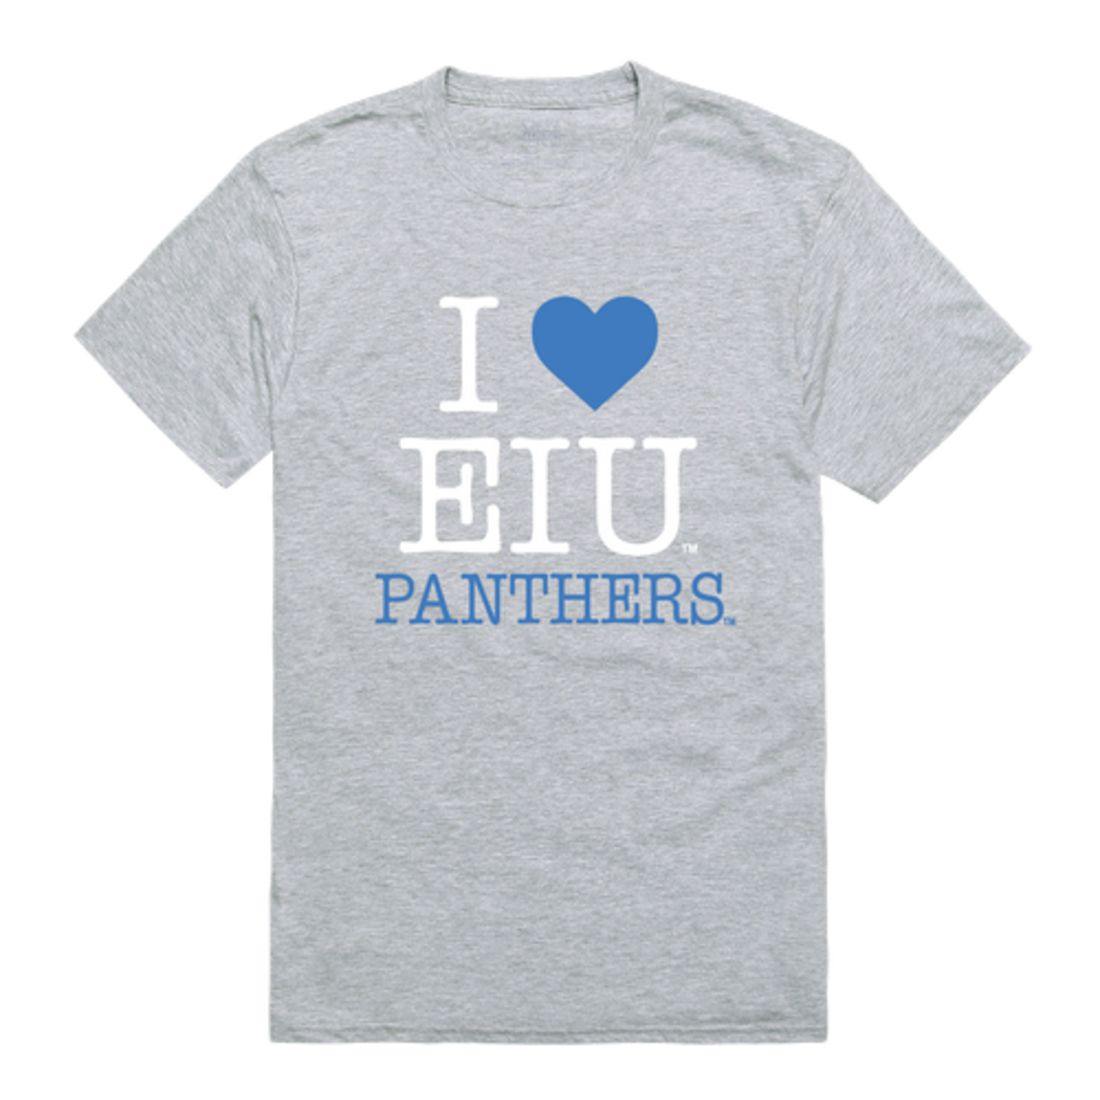 I Love EIU Eastern Illinois University Panthers T-Shirt-Campus-Wardrobe